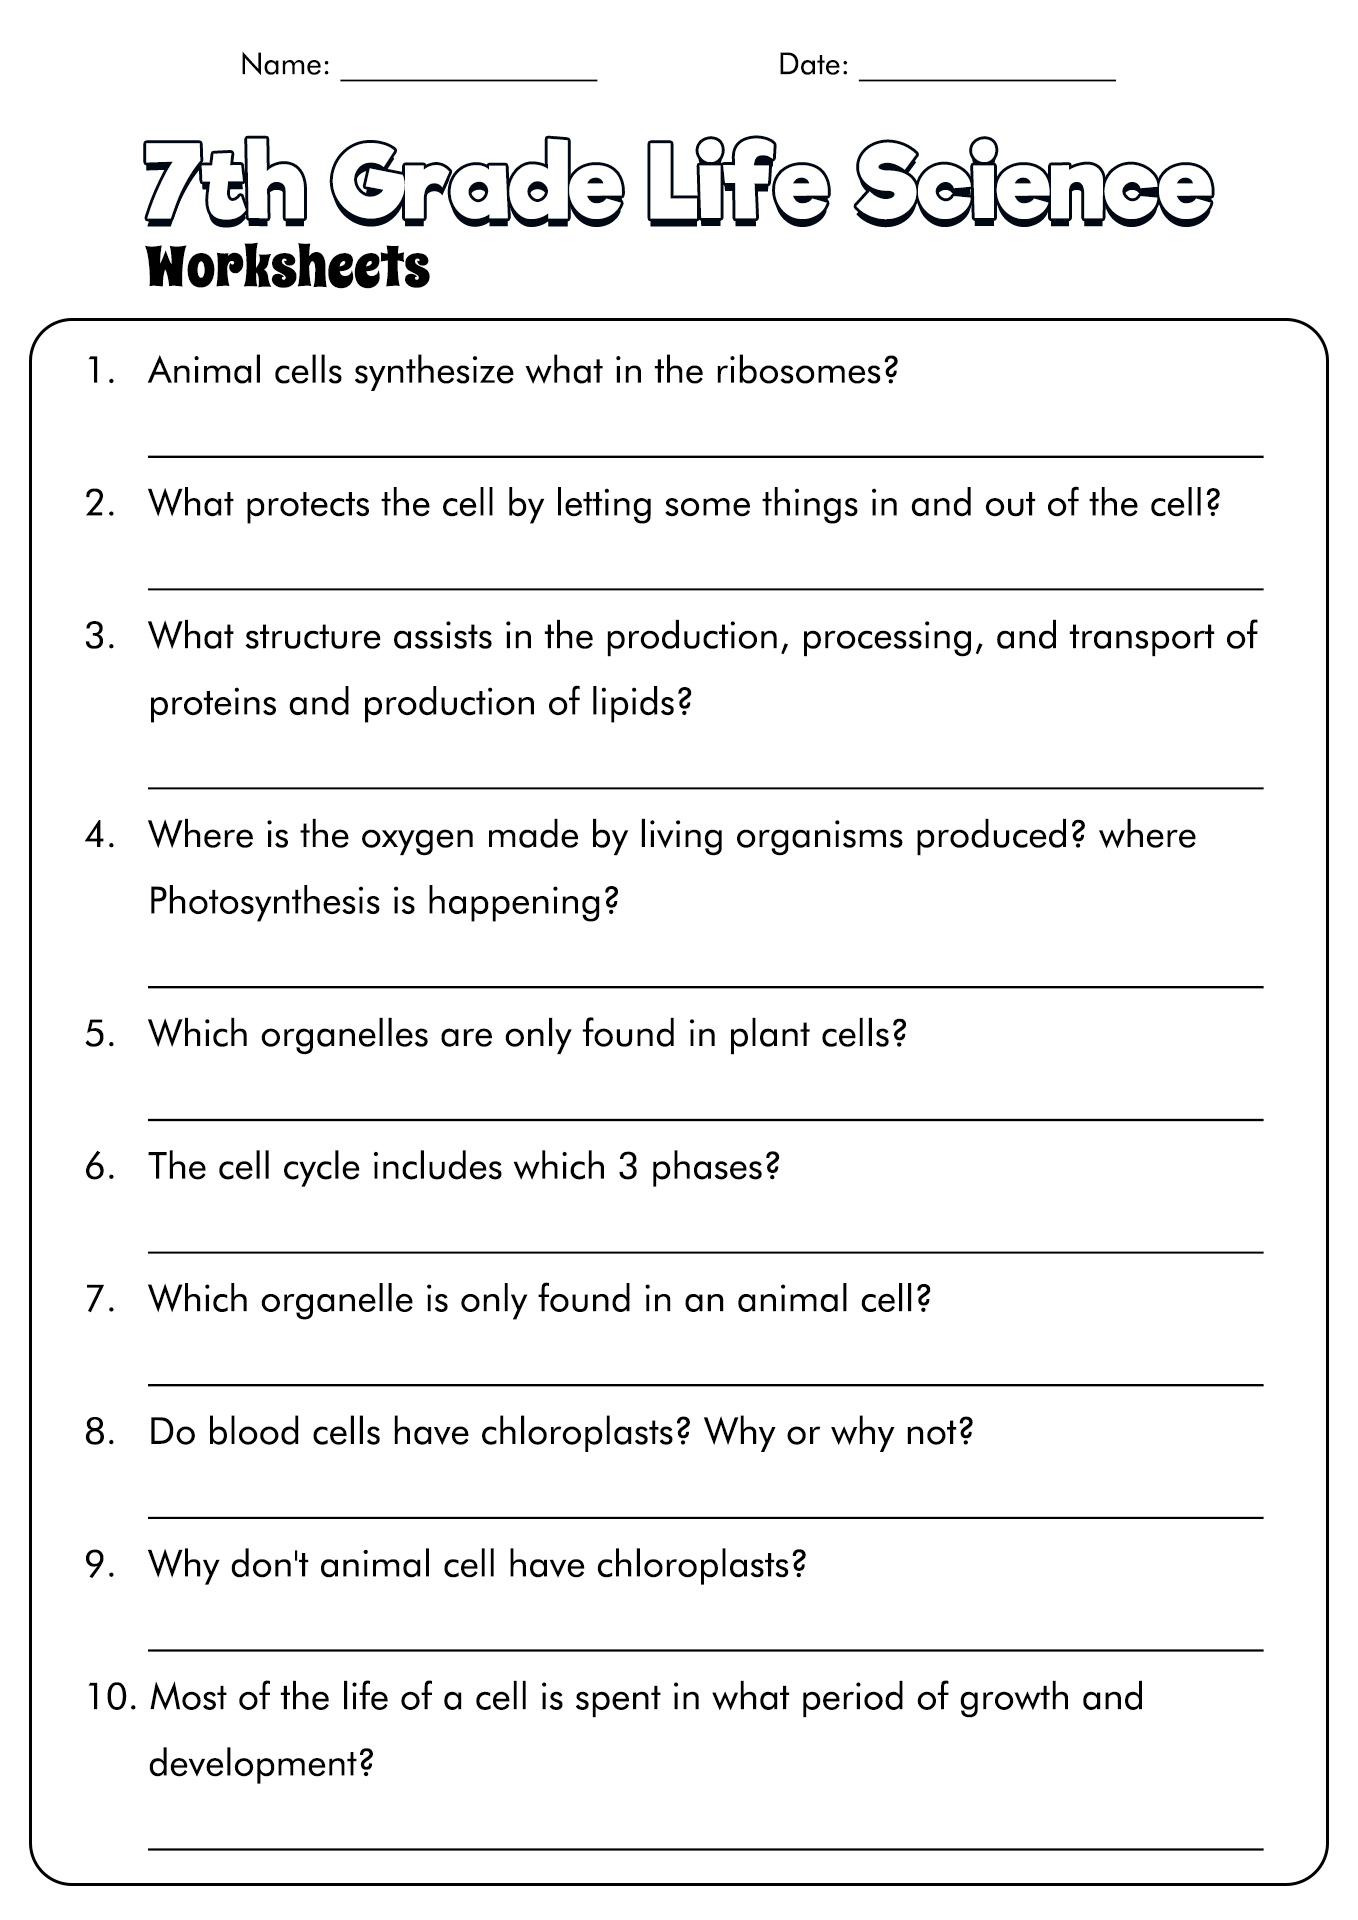 7th Grade Life Science Cells Worksheet